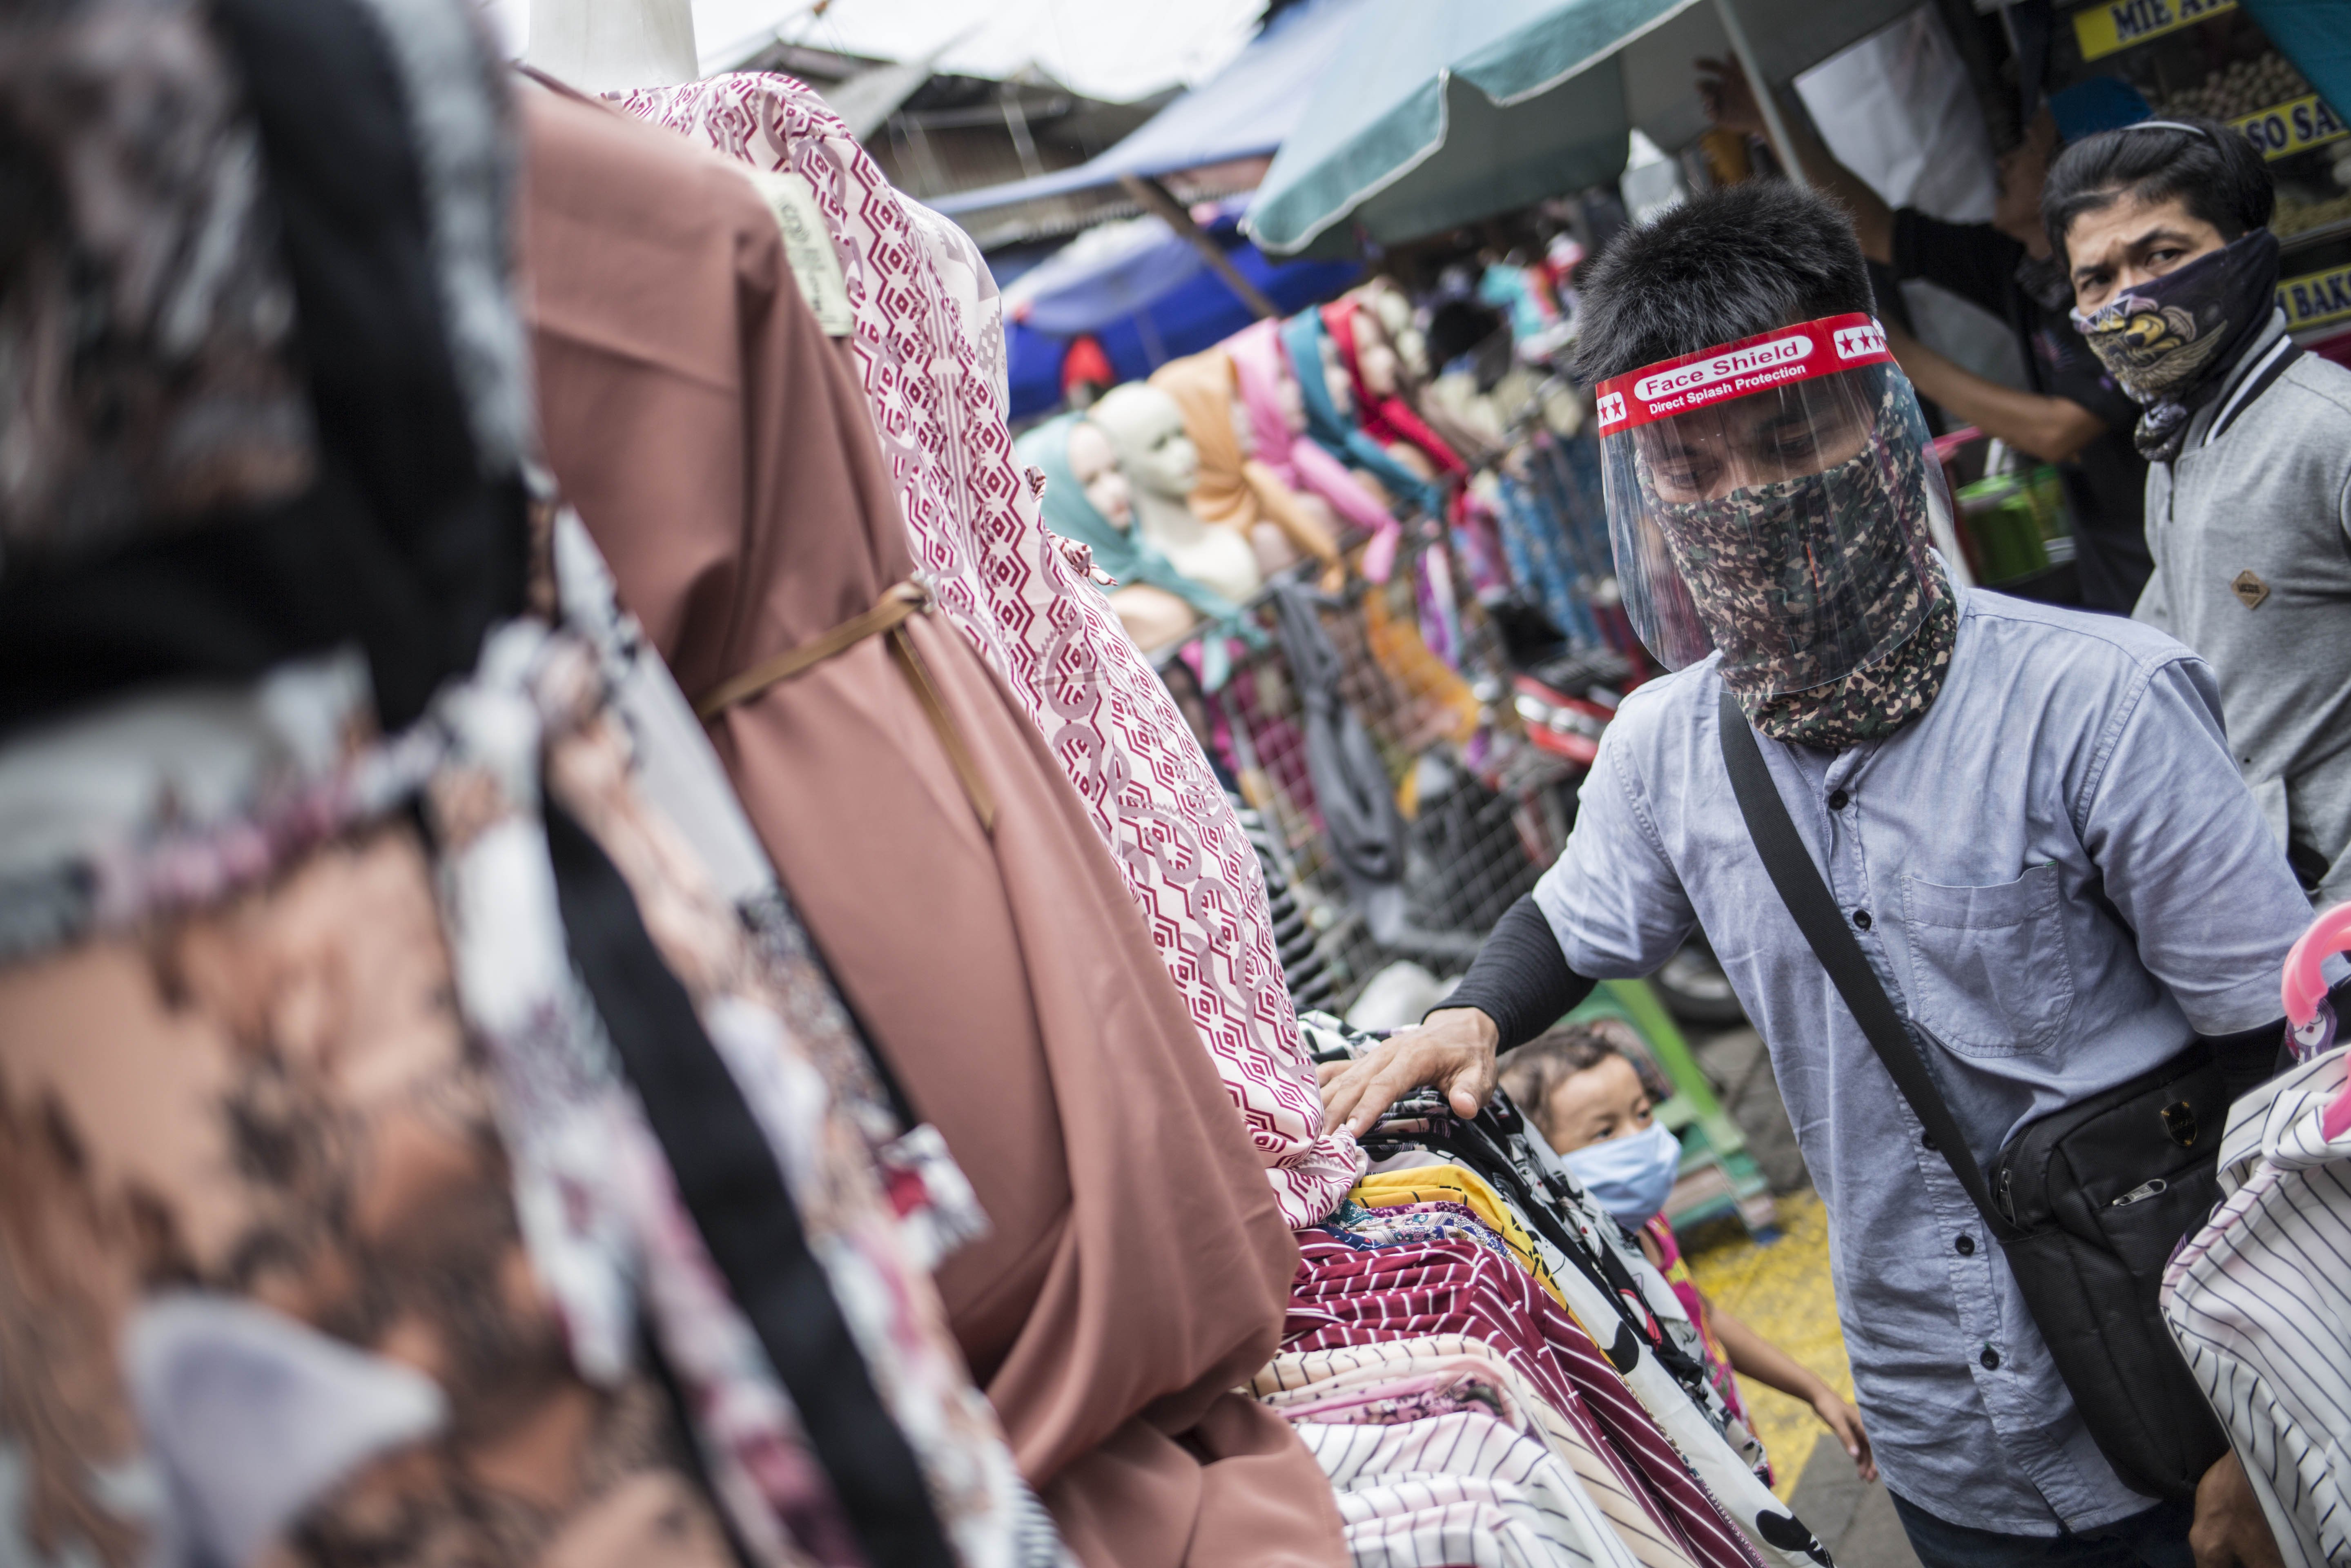 Pedagang menggunakan face shield saat melayani pembeli di Kawasan Pasar Tanah Abang, Jakarta, Senin (18/5/2020). Meski kawasan niaga Pasar Tanah Abang telah tutup selama masa Pembatasan Sosial Berskala Besar (PSBB), namun sebagian pedagang tetap menggelar lapaknya di sejumlah titik seperti di atas trotoar dan di gang perkampungan setempat.